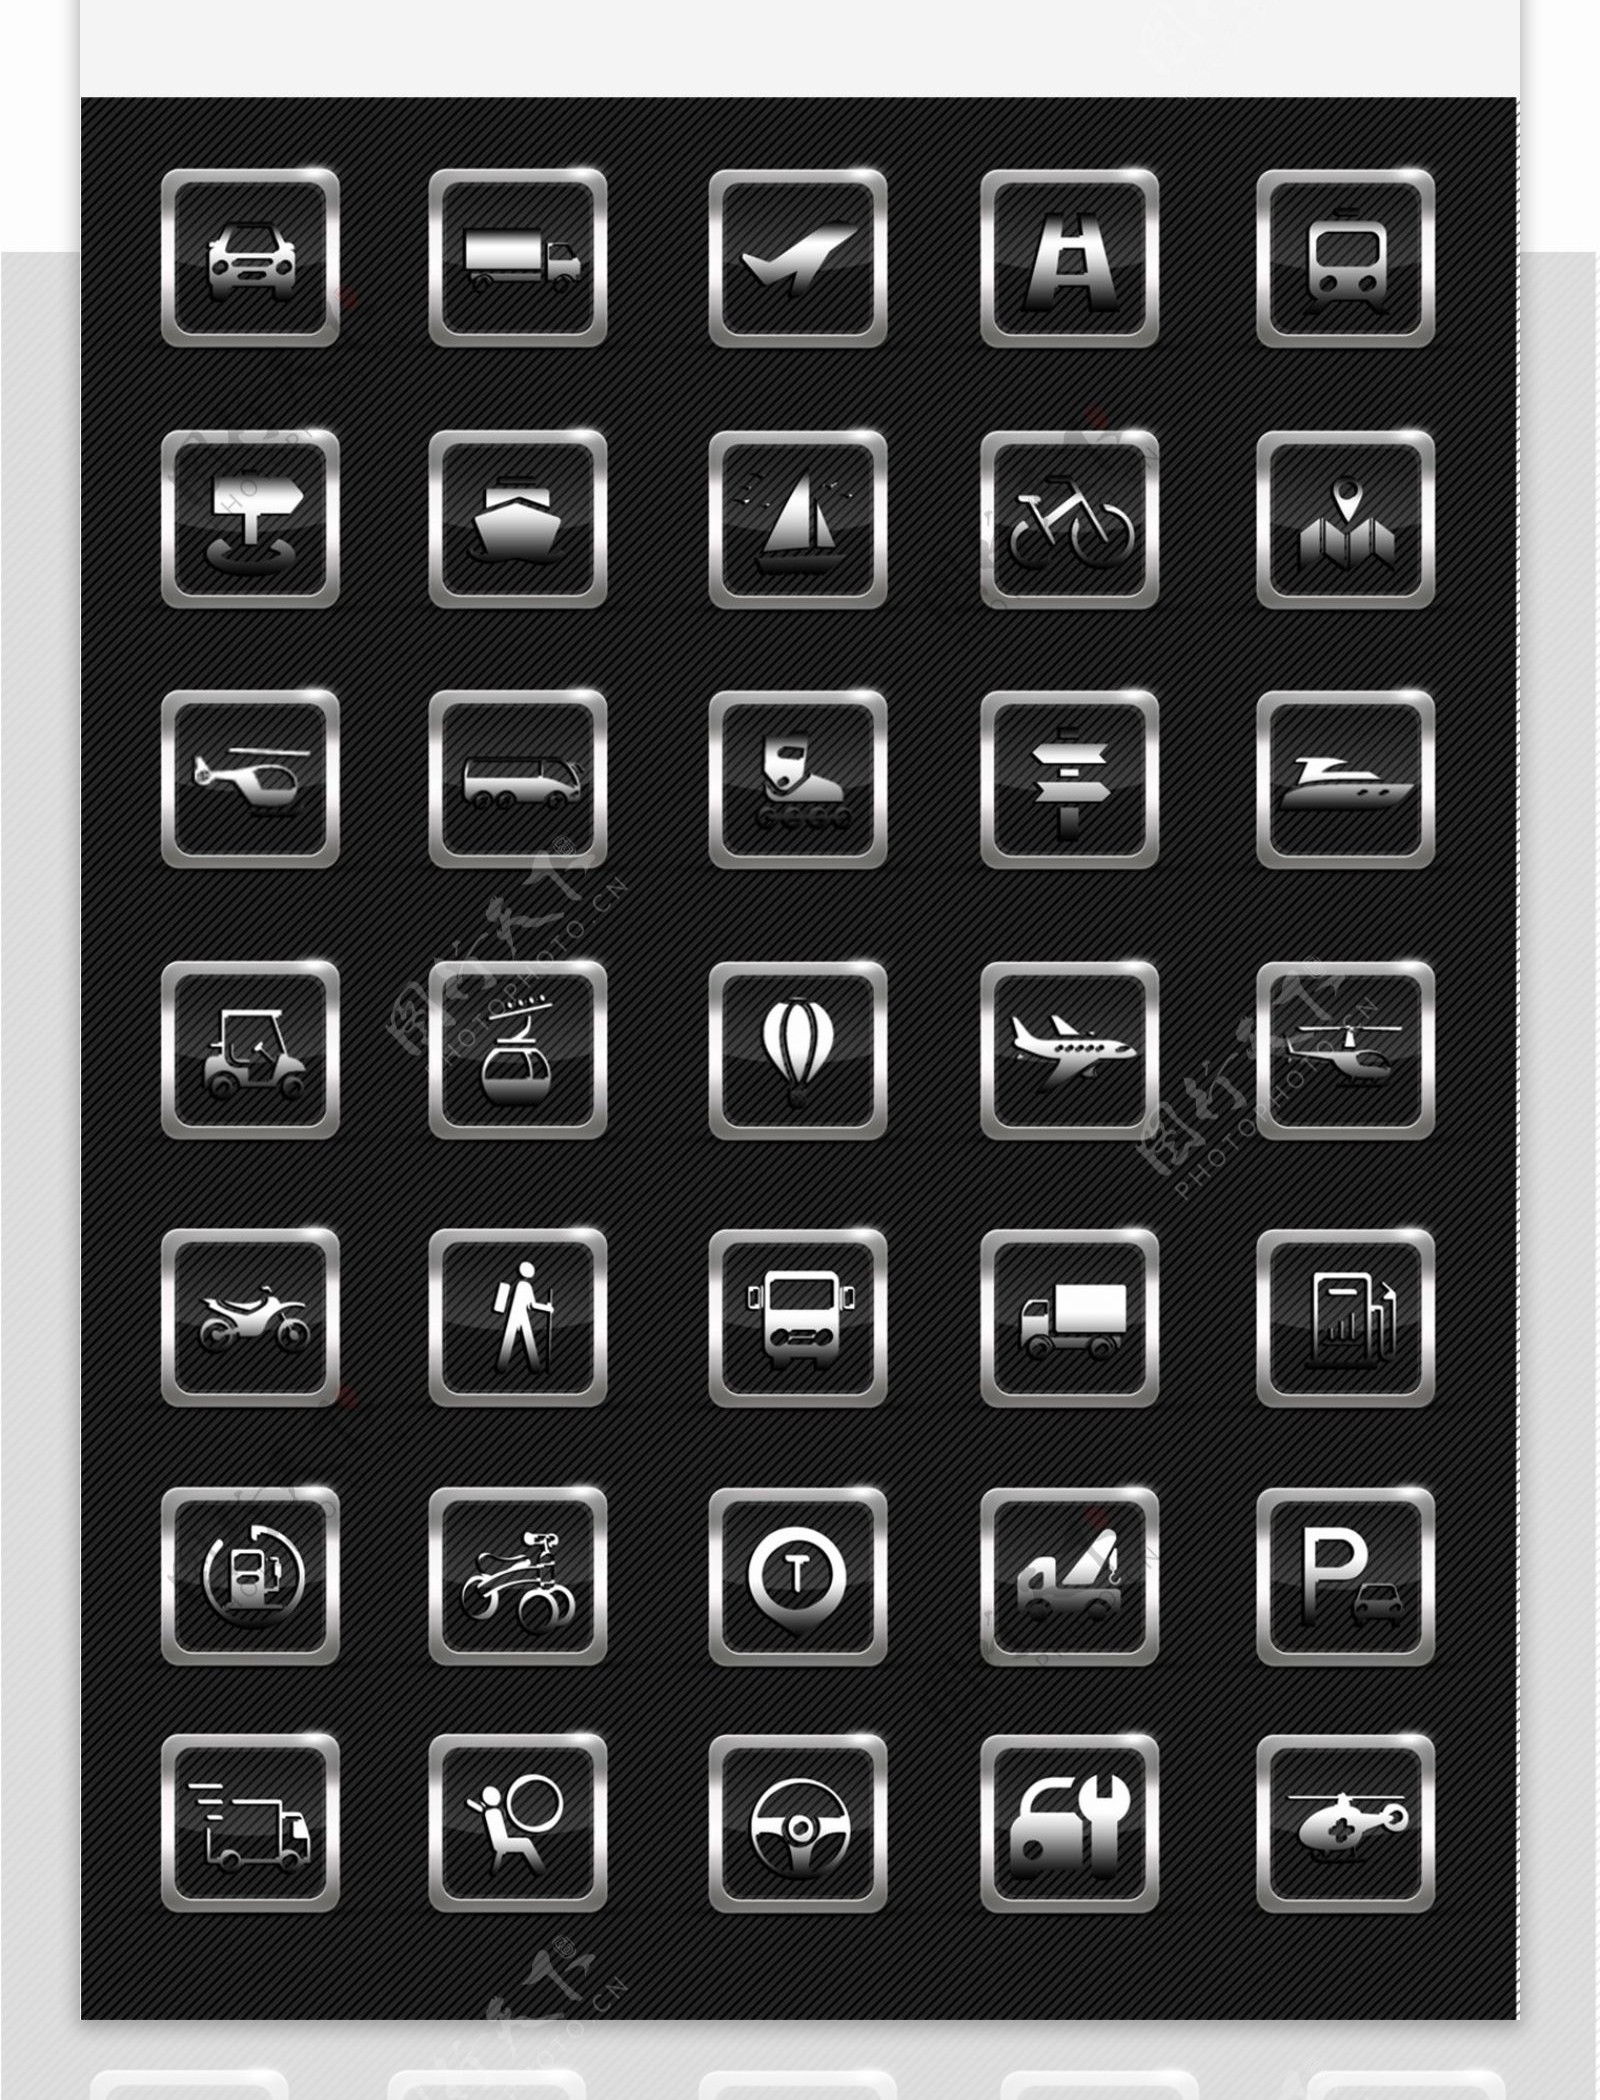 原创交通金属样式icon图标